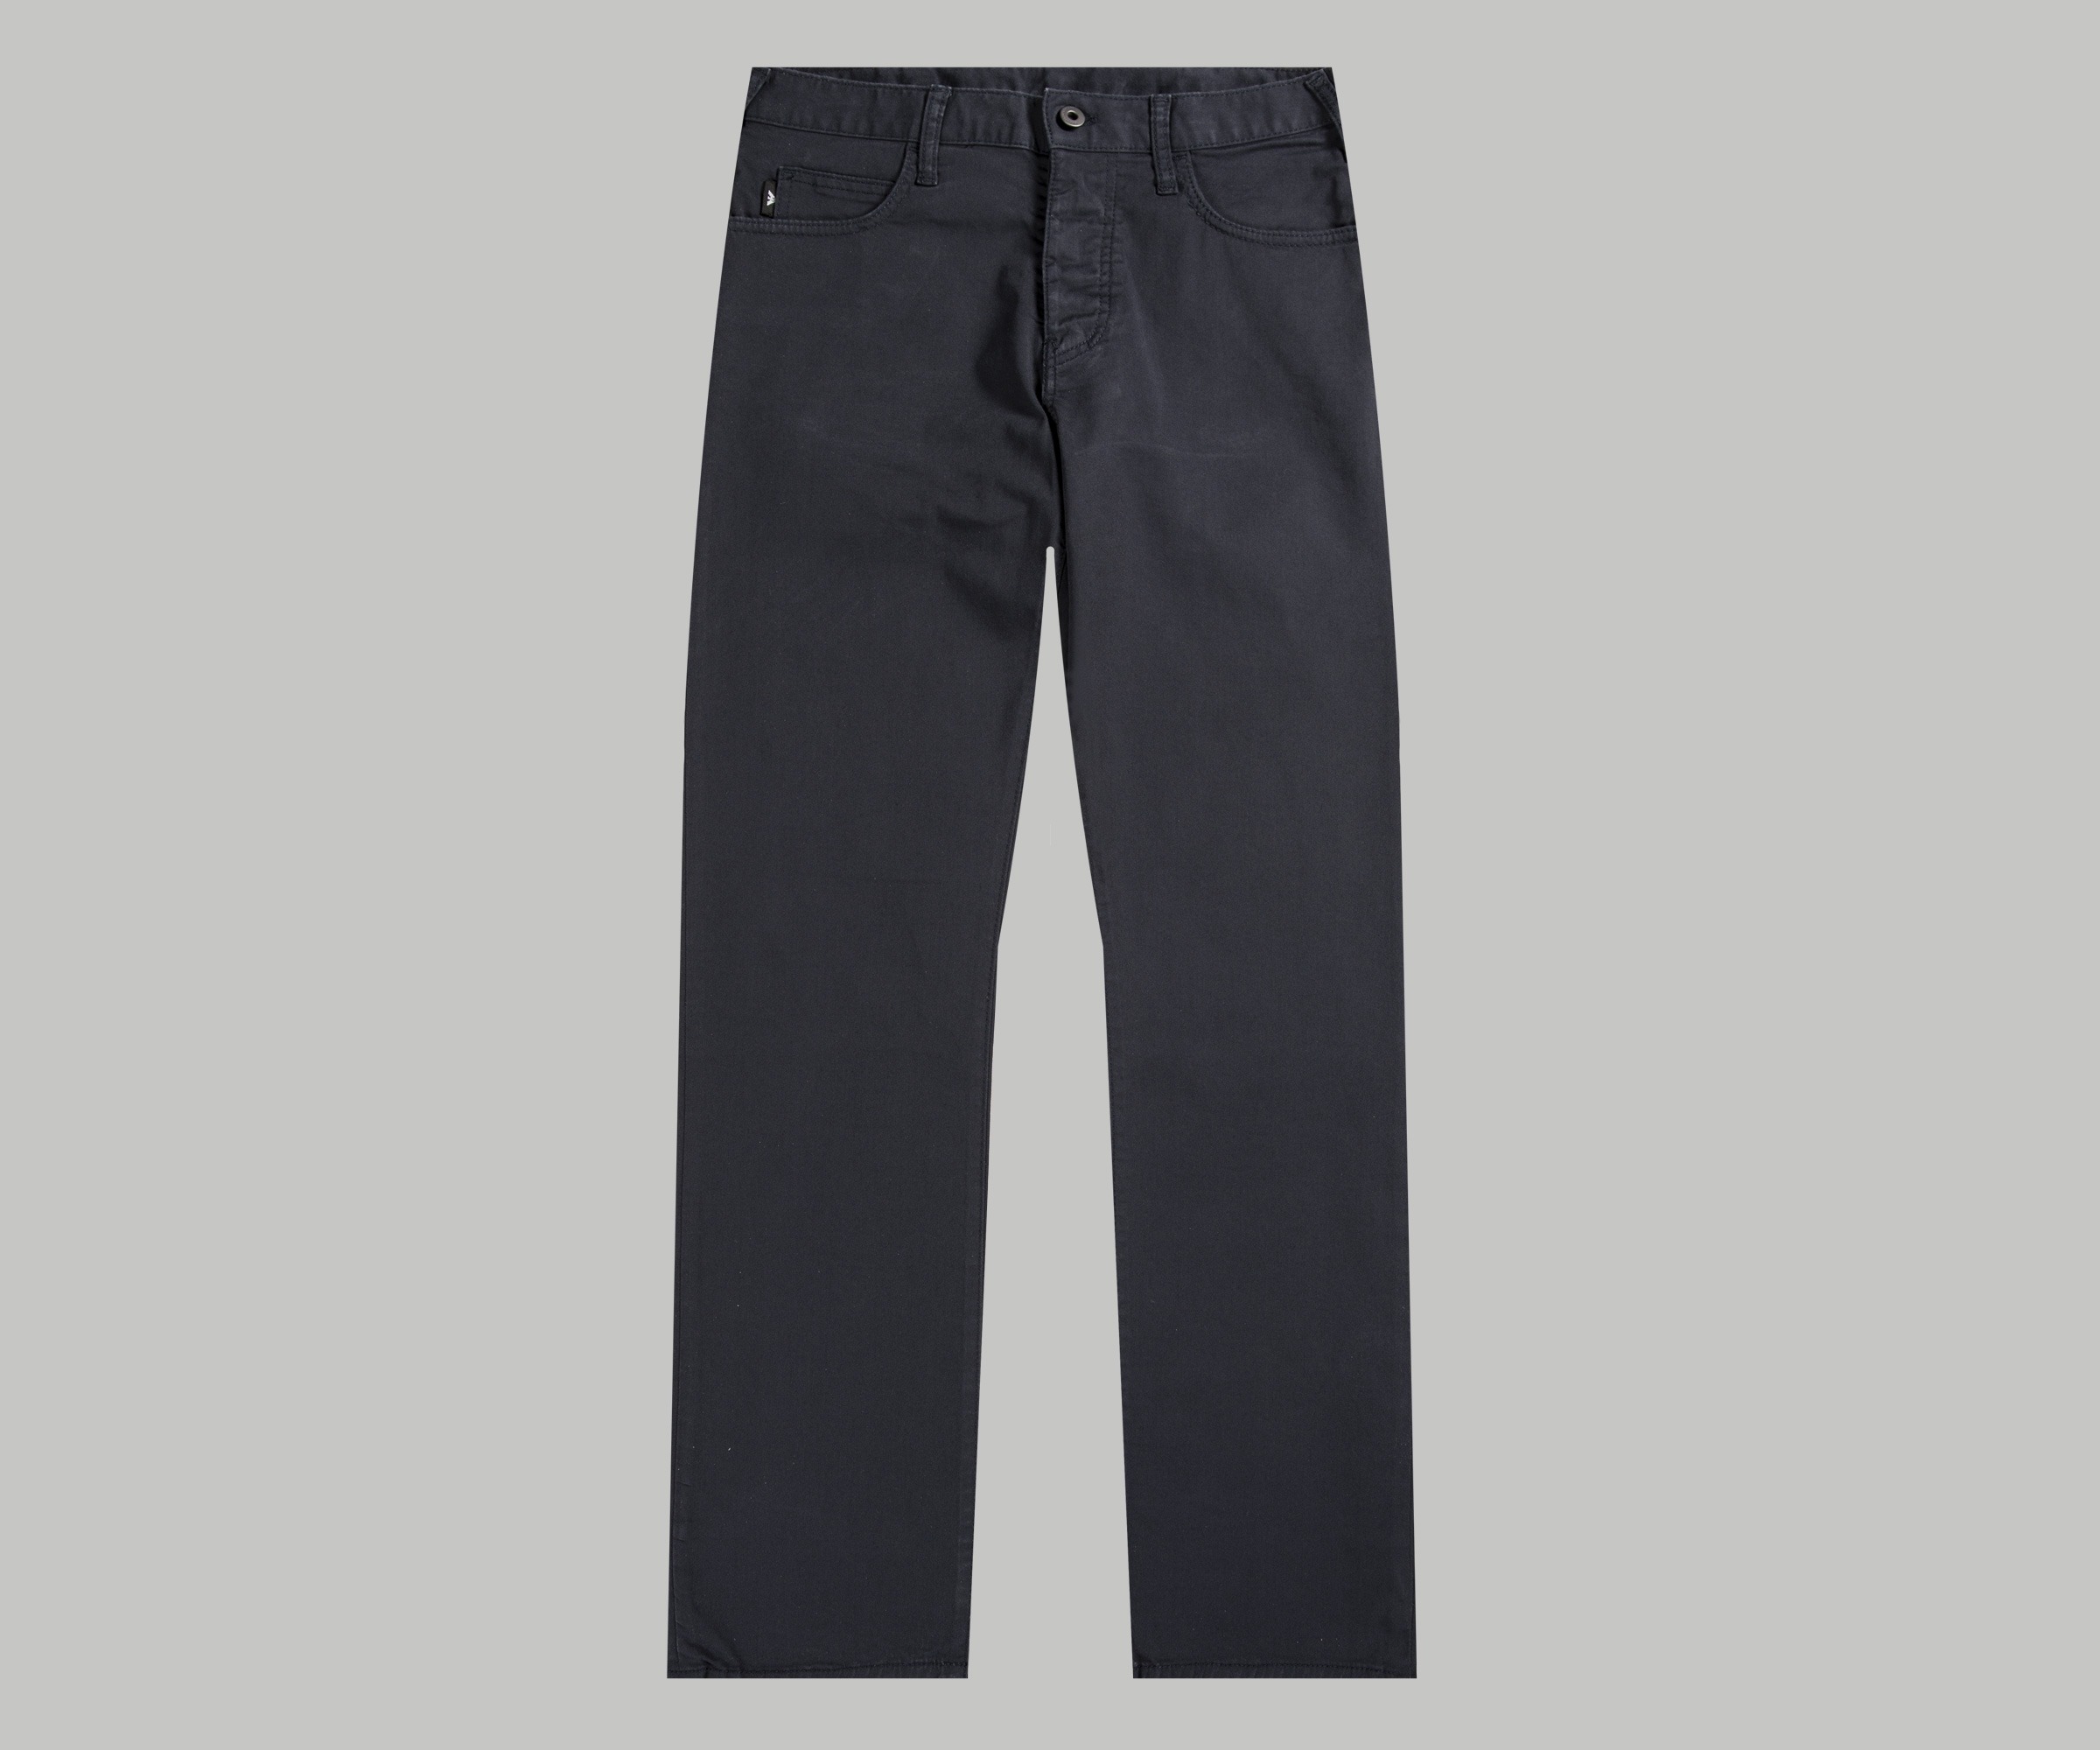 Emporio Armani ’J21’ Regular Fit Cotton Chino Jeans Navy